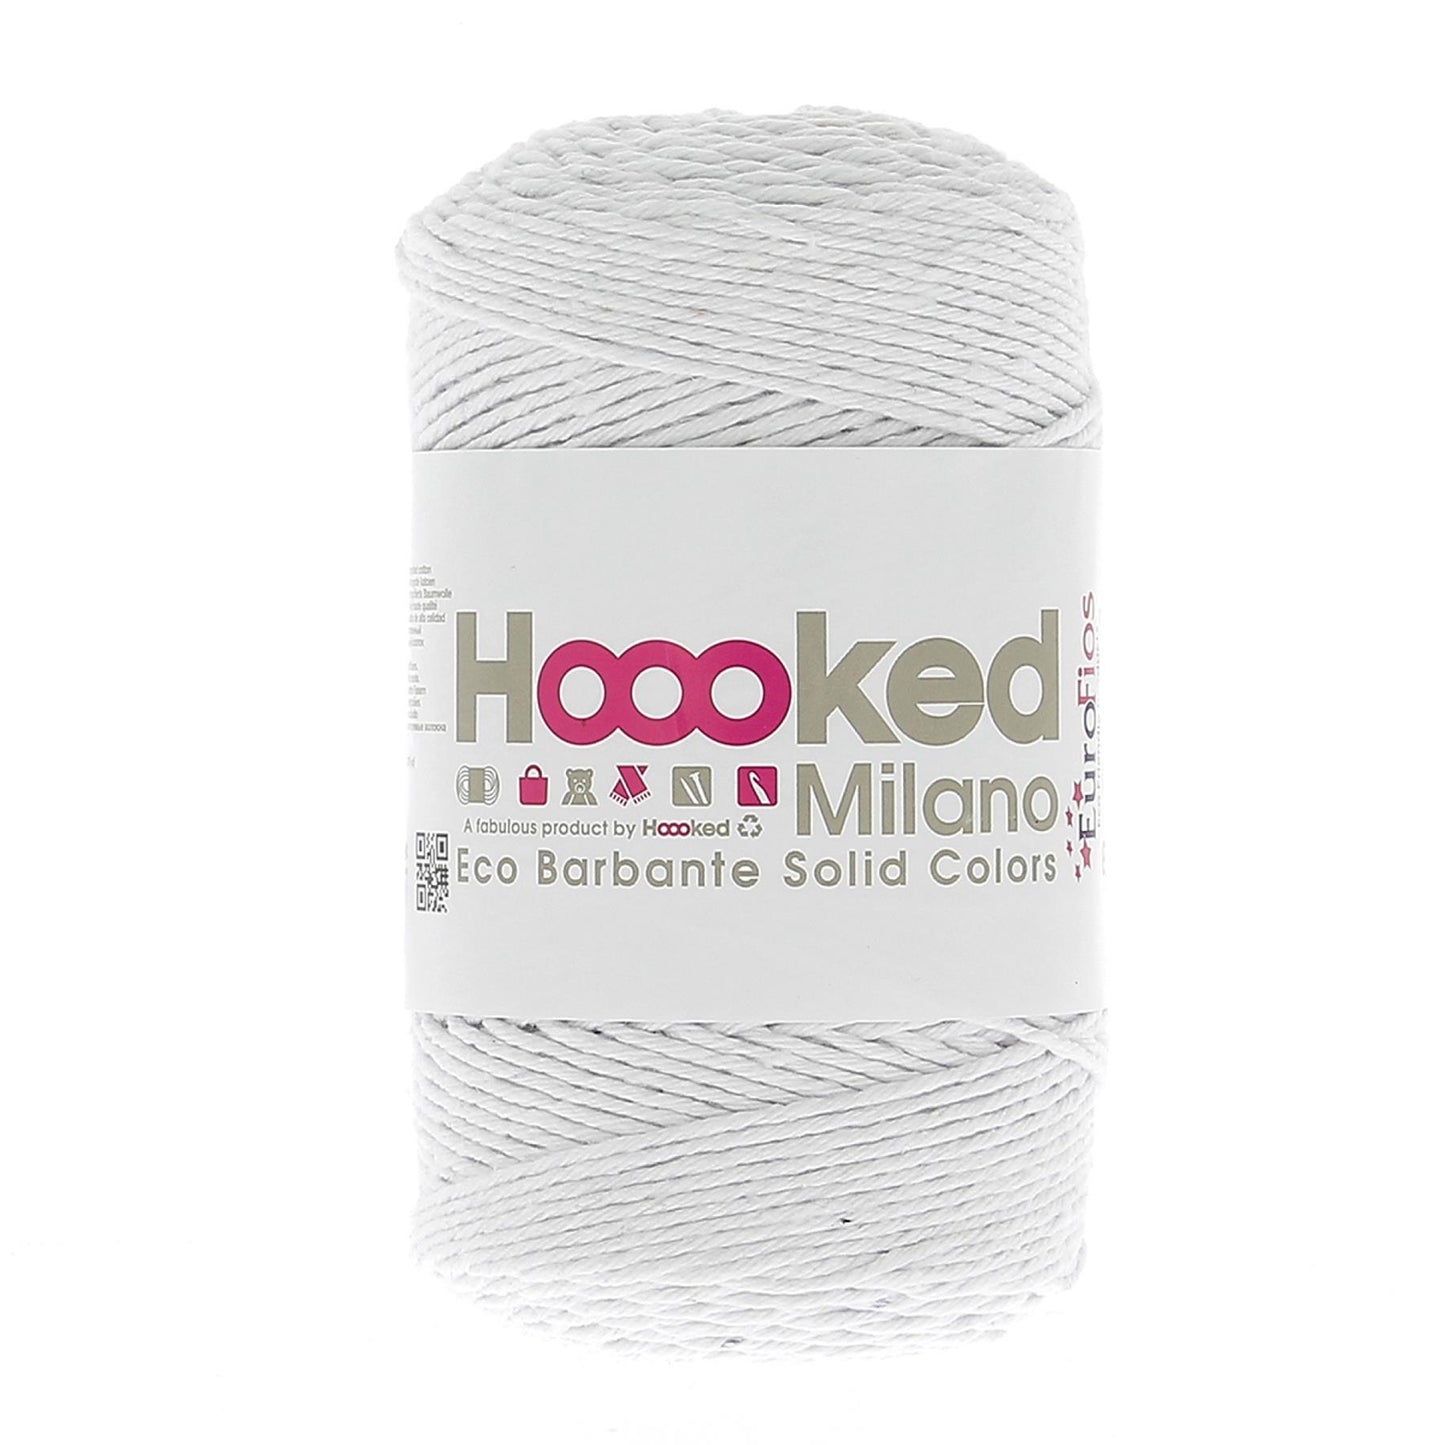 [Hoooked] R200 Eco Barbante Milano Lotus Cotton Yarn - 204M, 200g